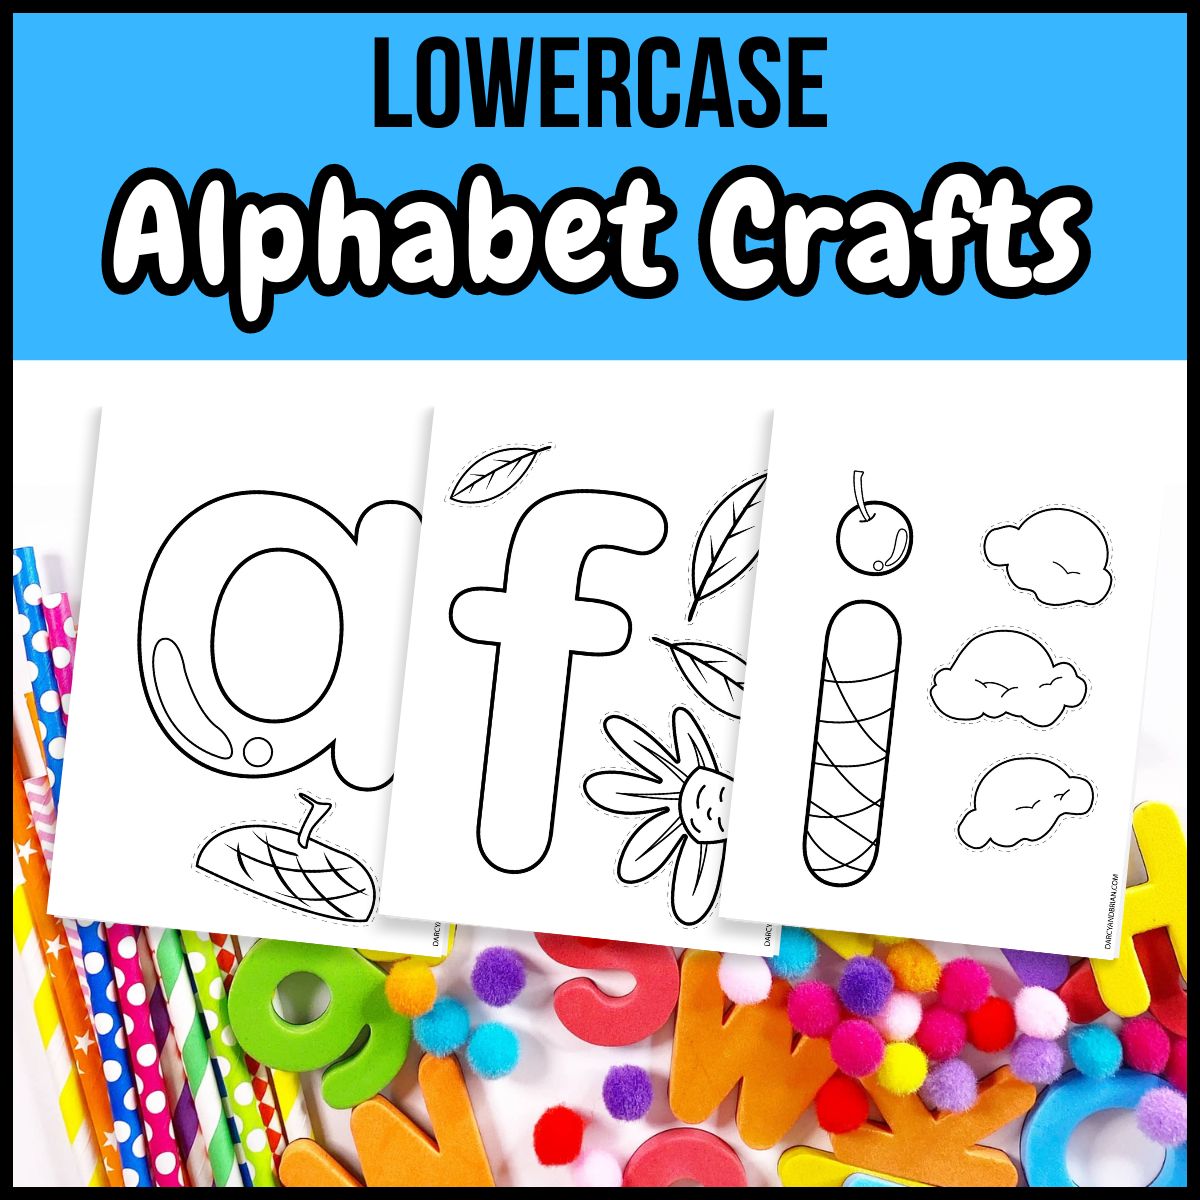 Lowercase Alphabet Crafts